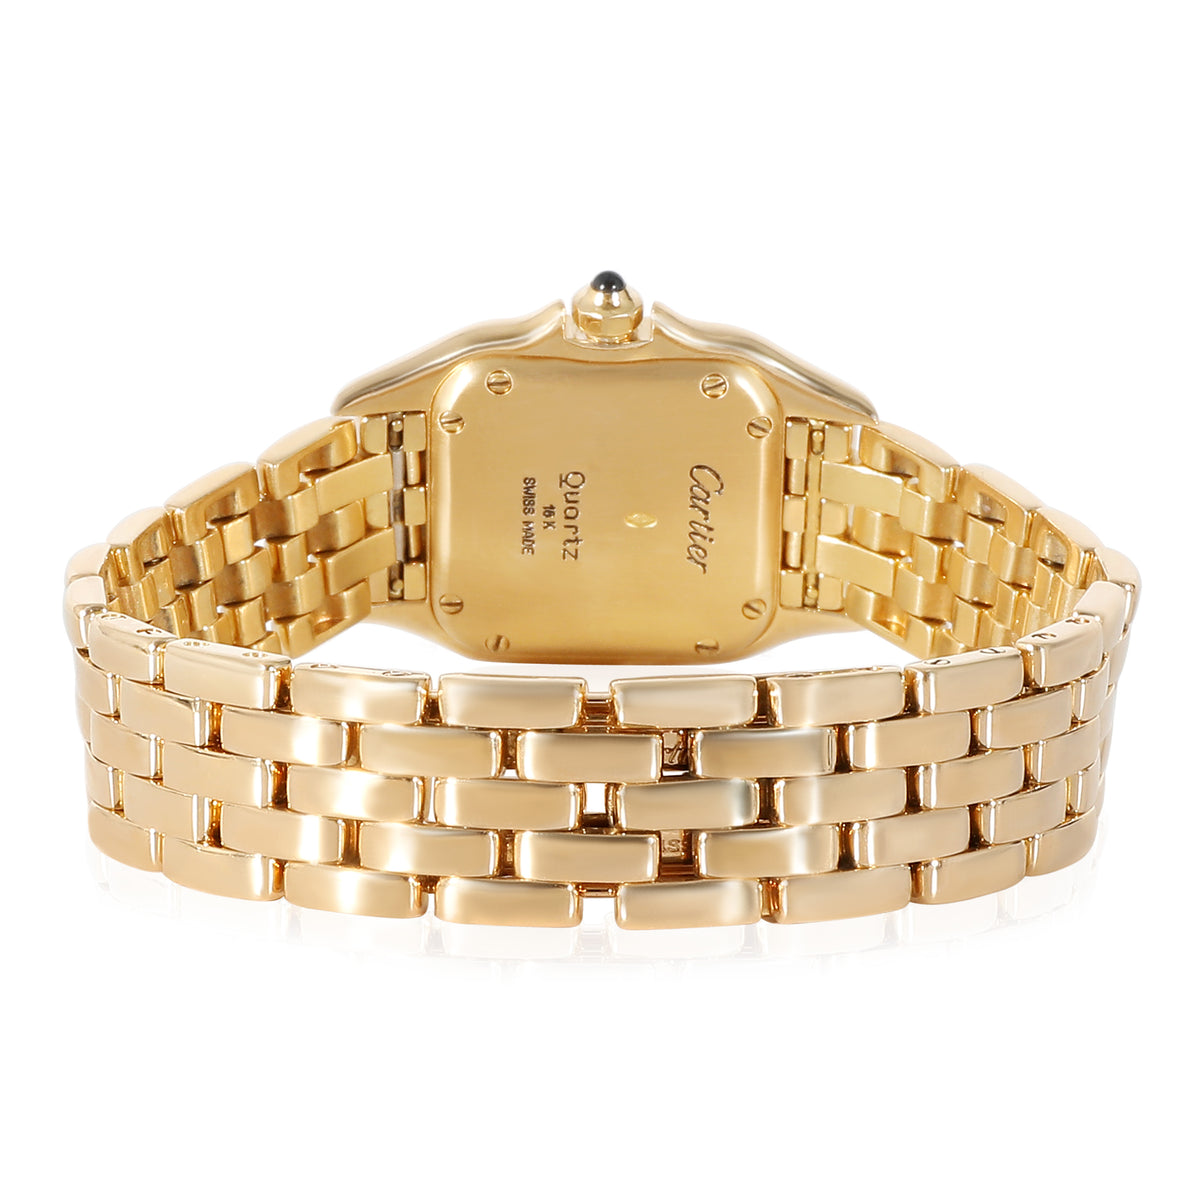 Cartier Panthere de Cartier 86691 Women's Watch in 18k Yellow Gold